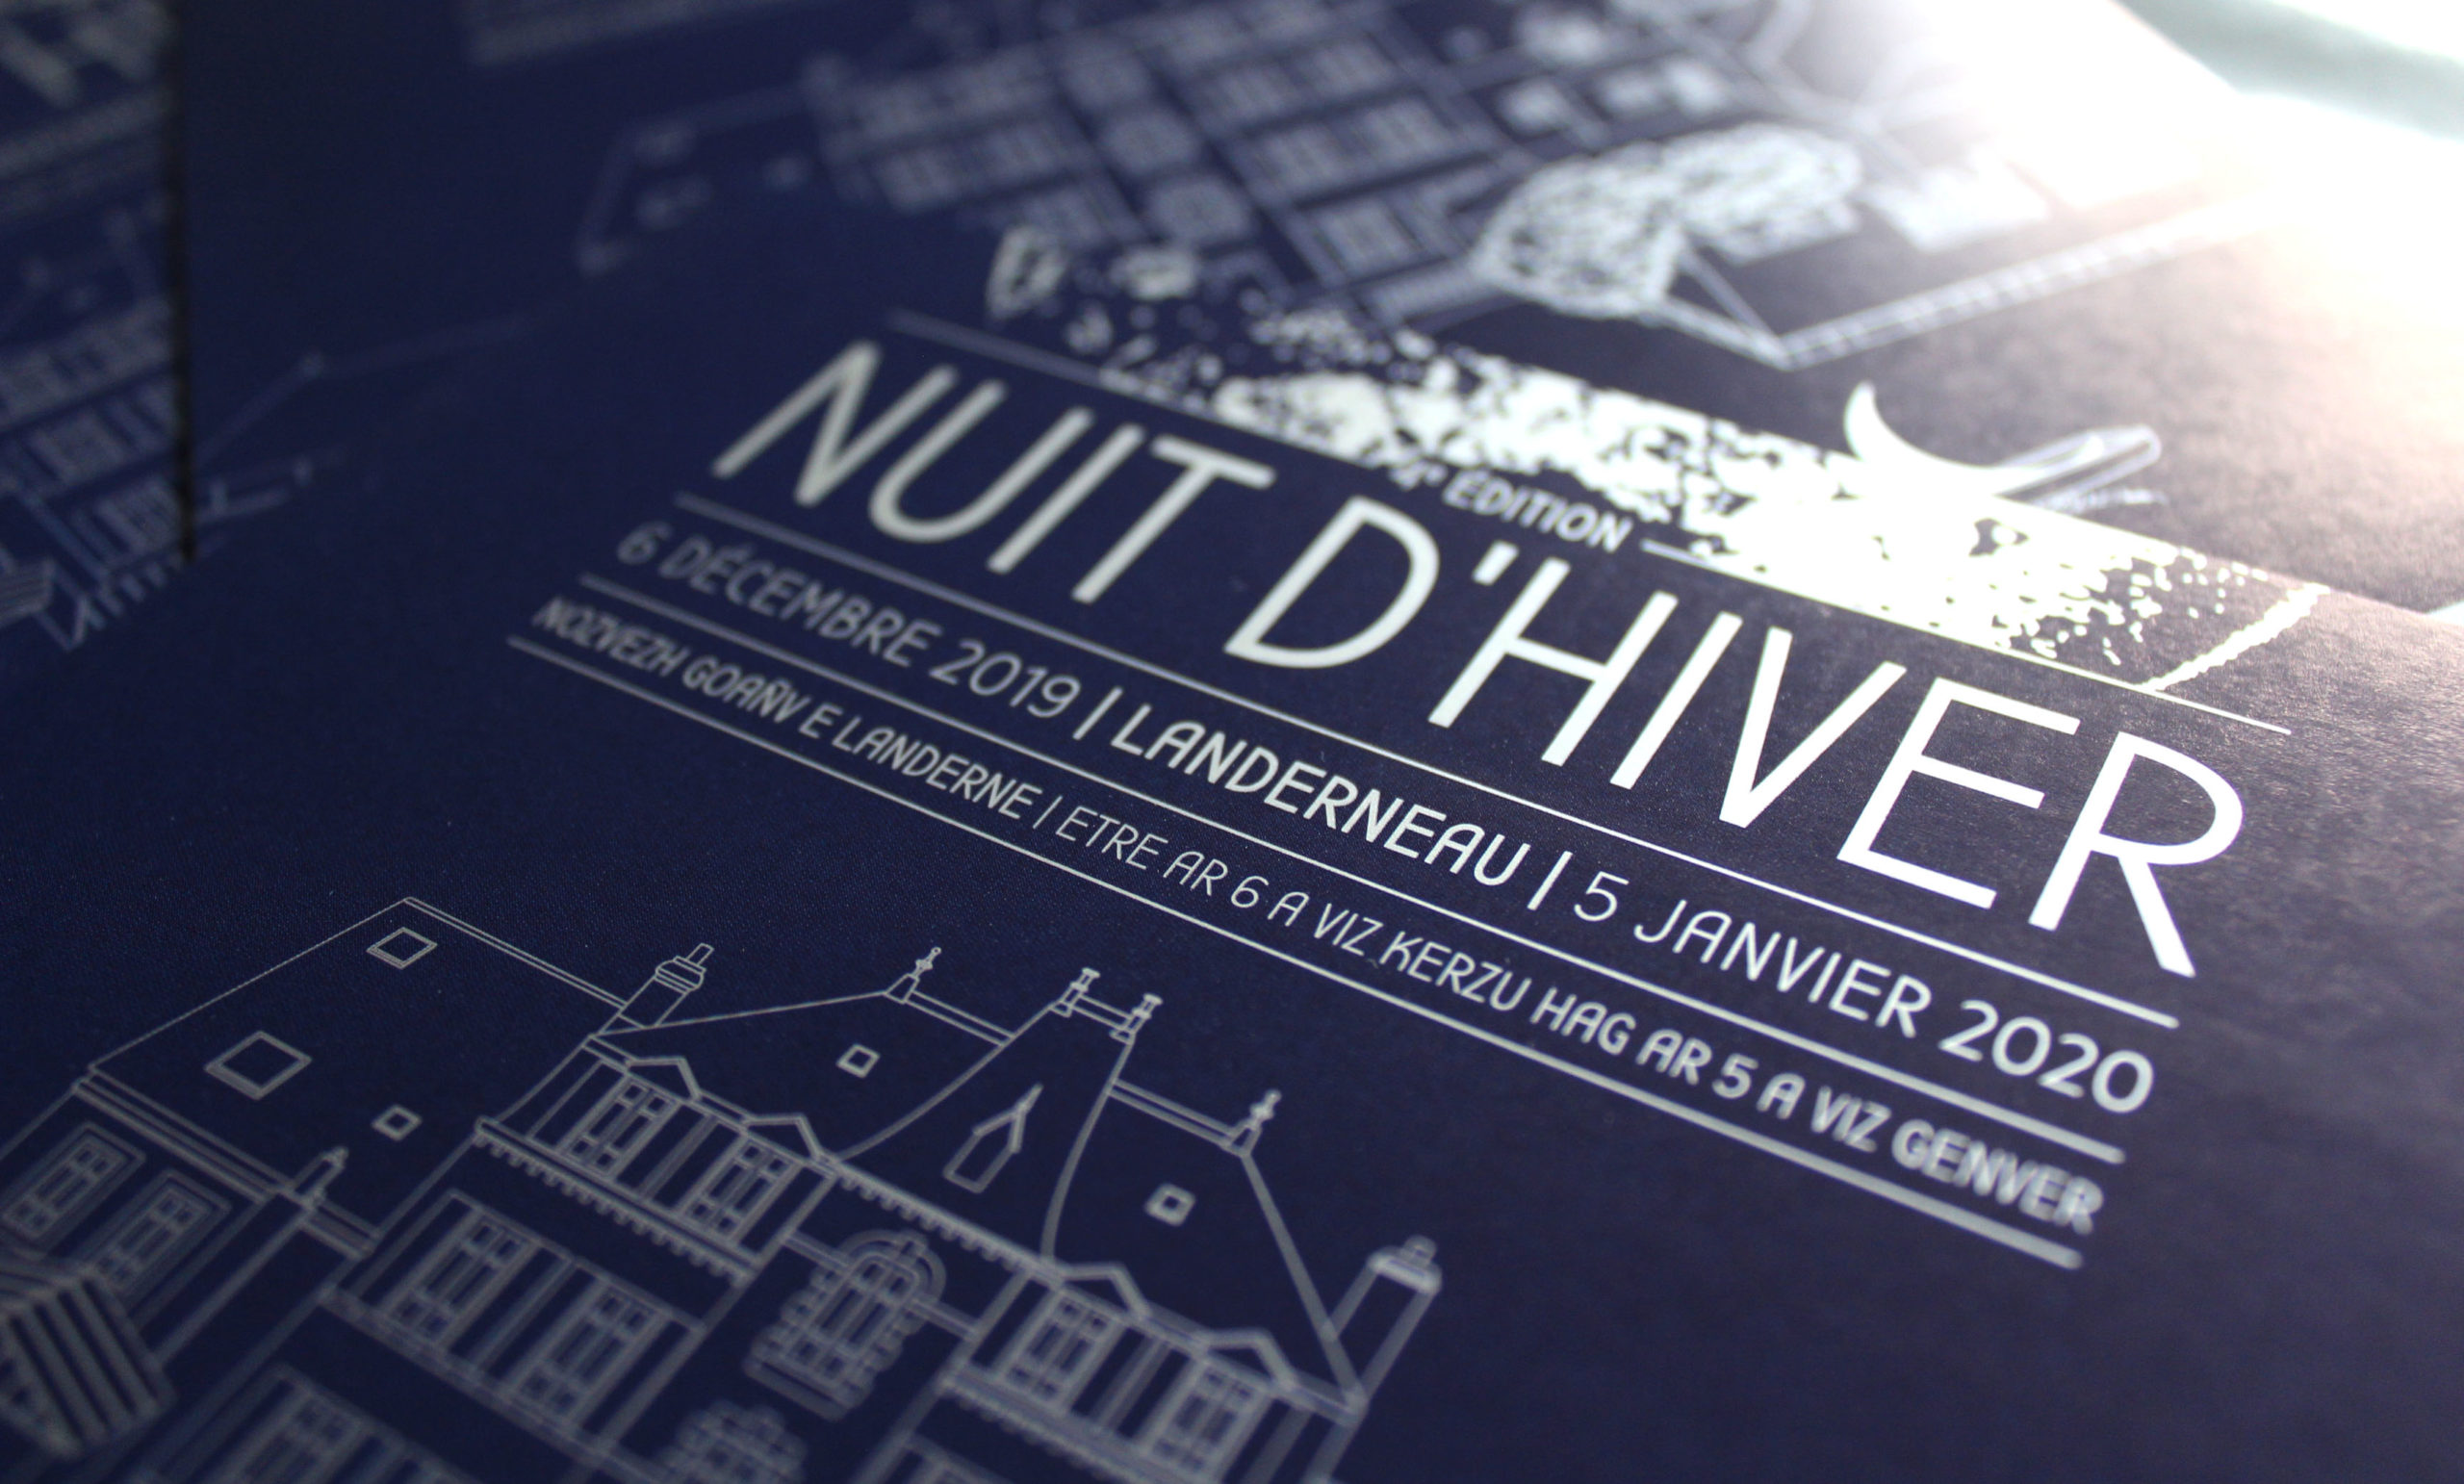 Flyer Nuit d'Hiver 2019 Landerneau - Atelier Bruine